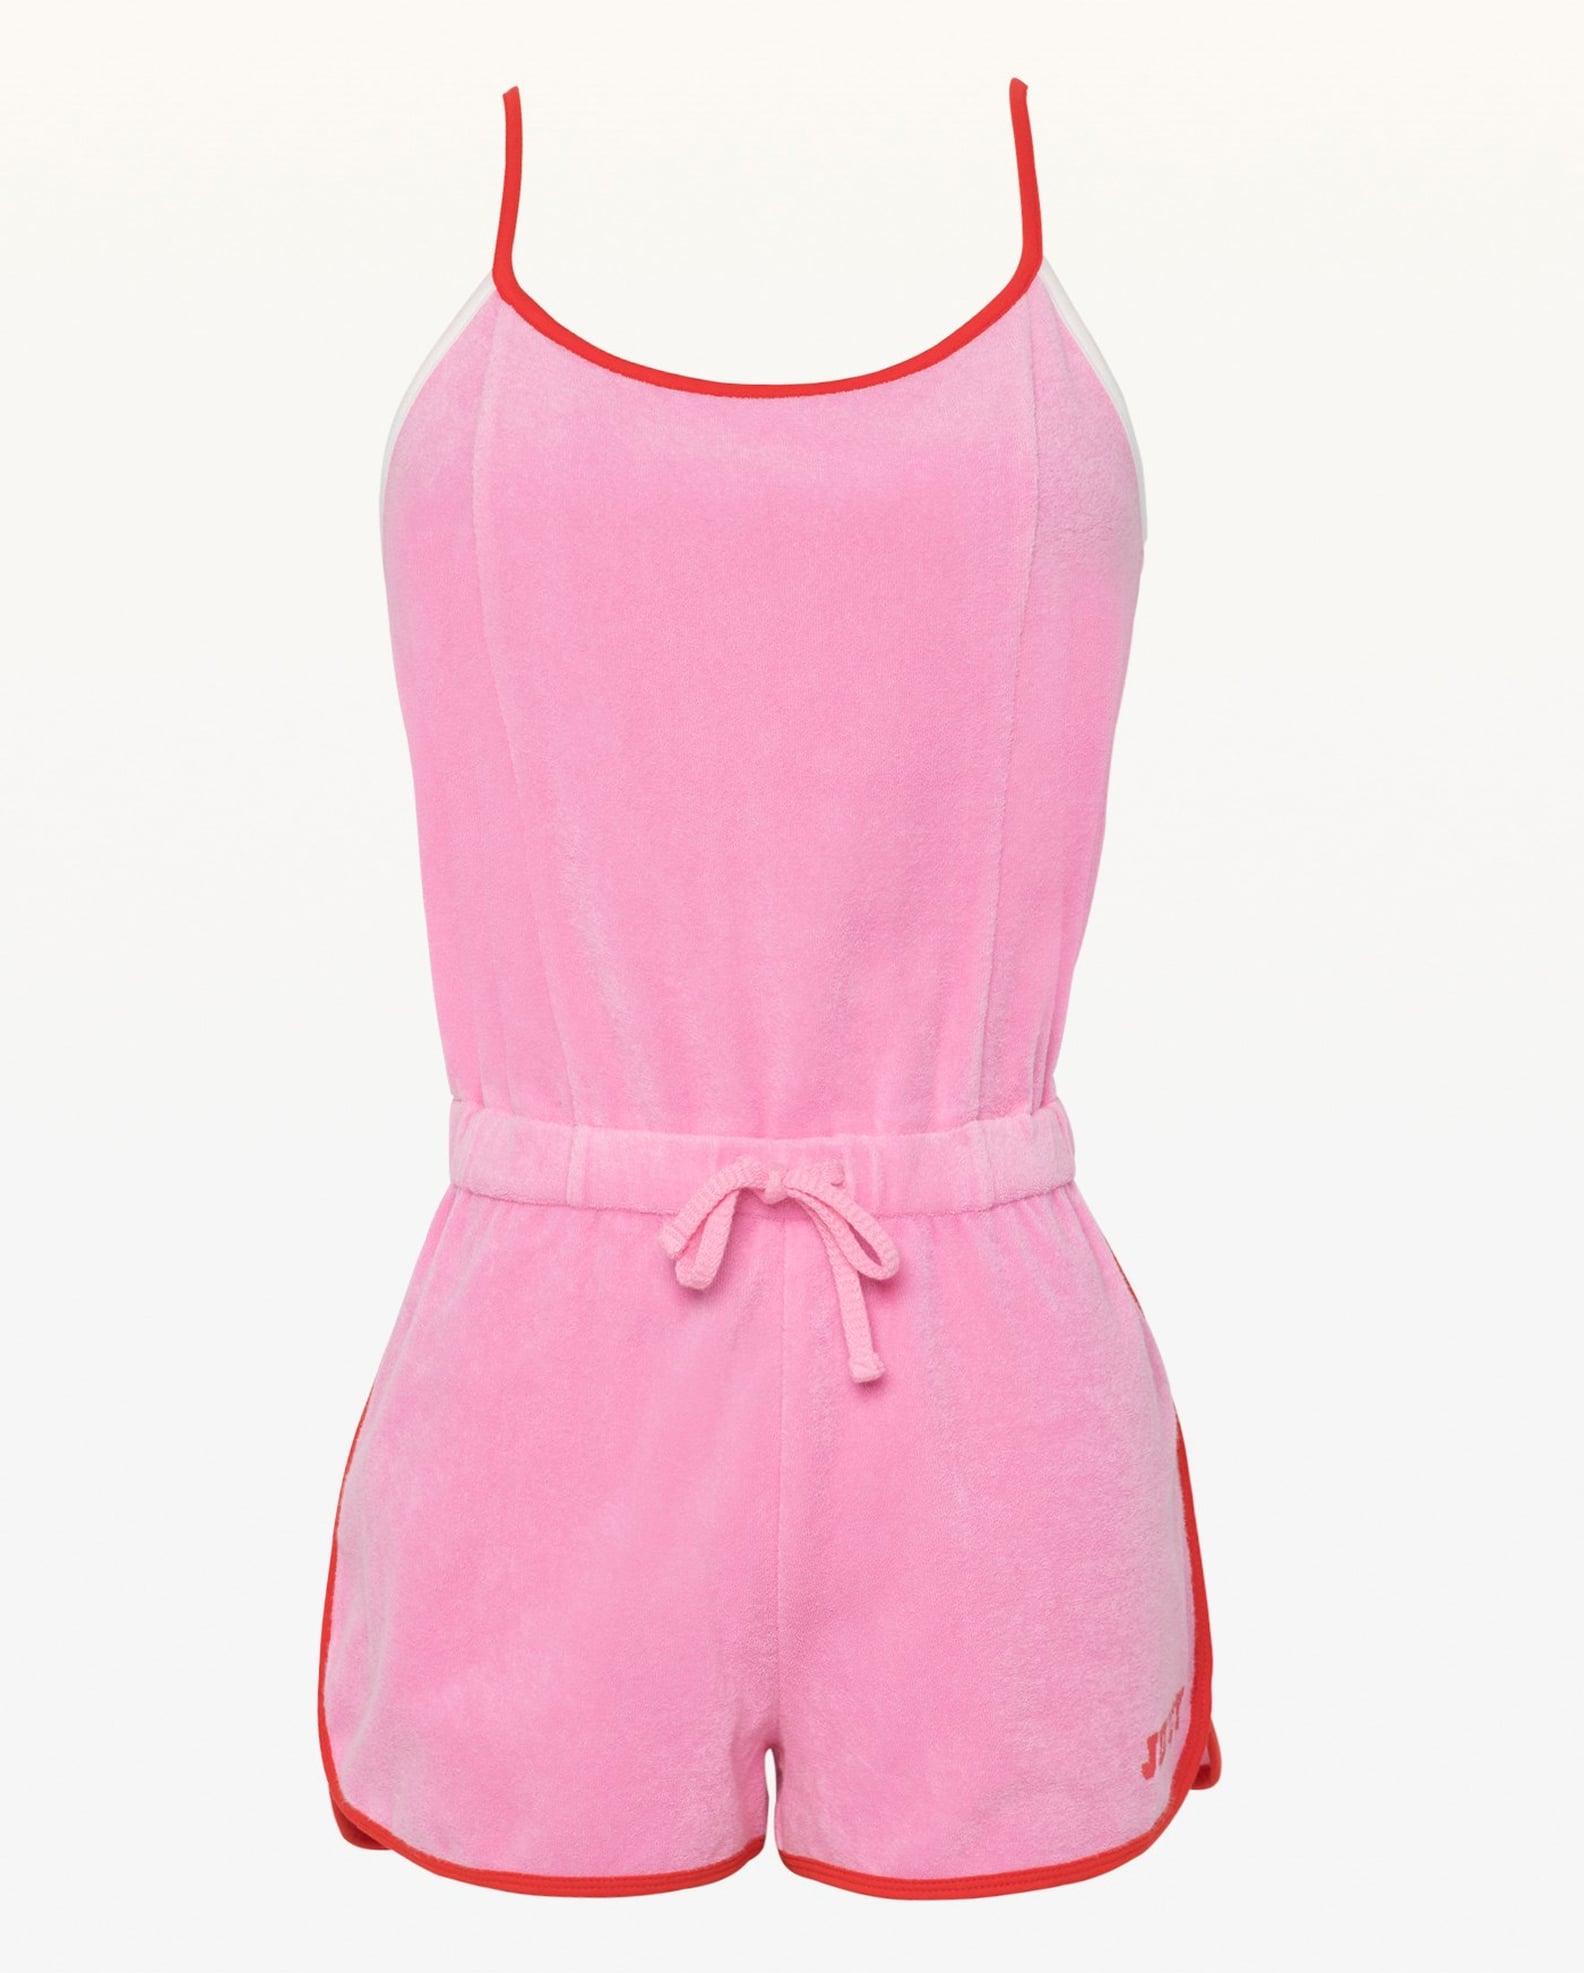 Kim Kardashian Pink Chanel Bodysuit | POPSUGAR Fashion